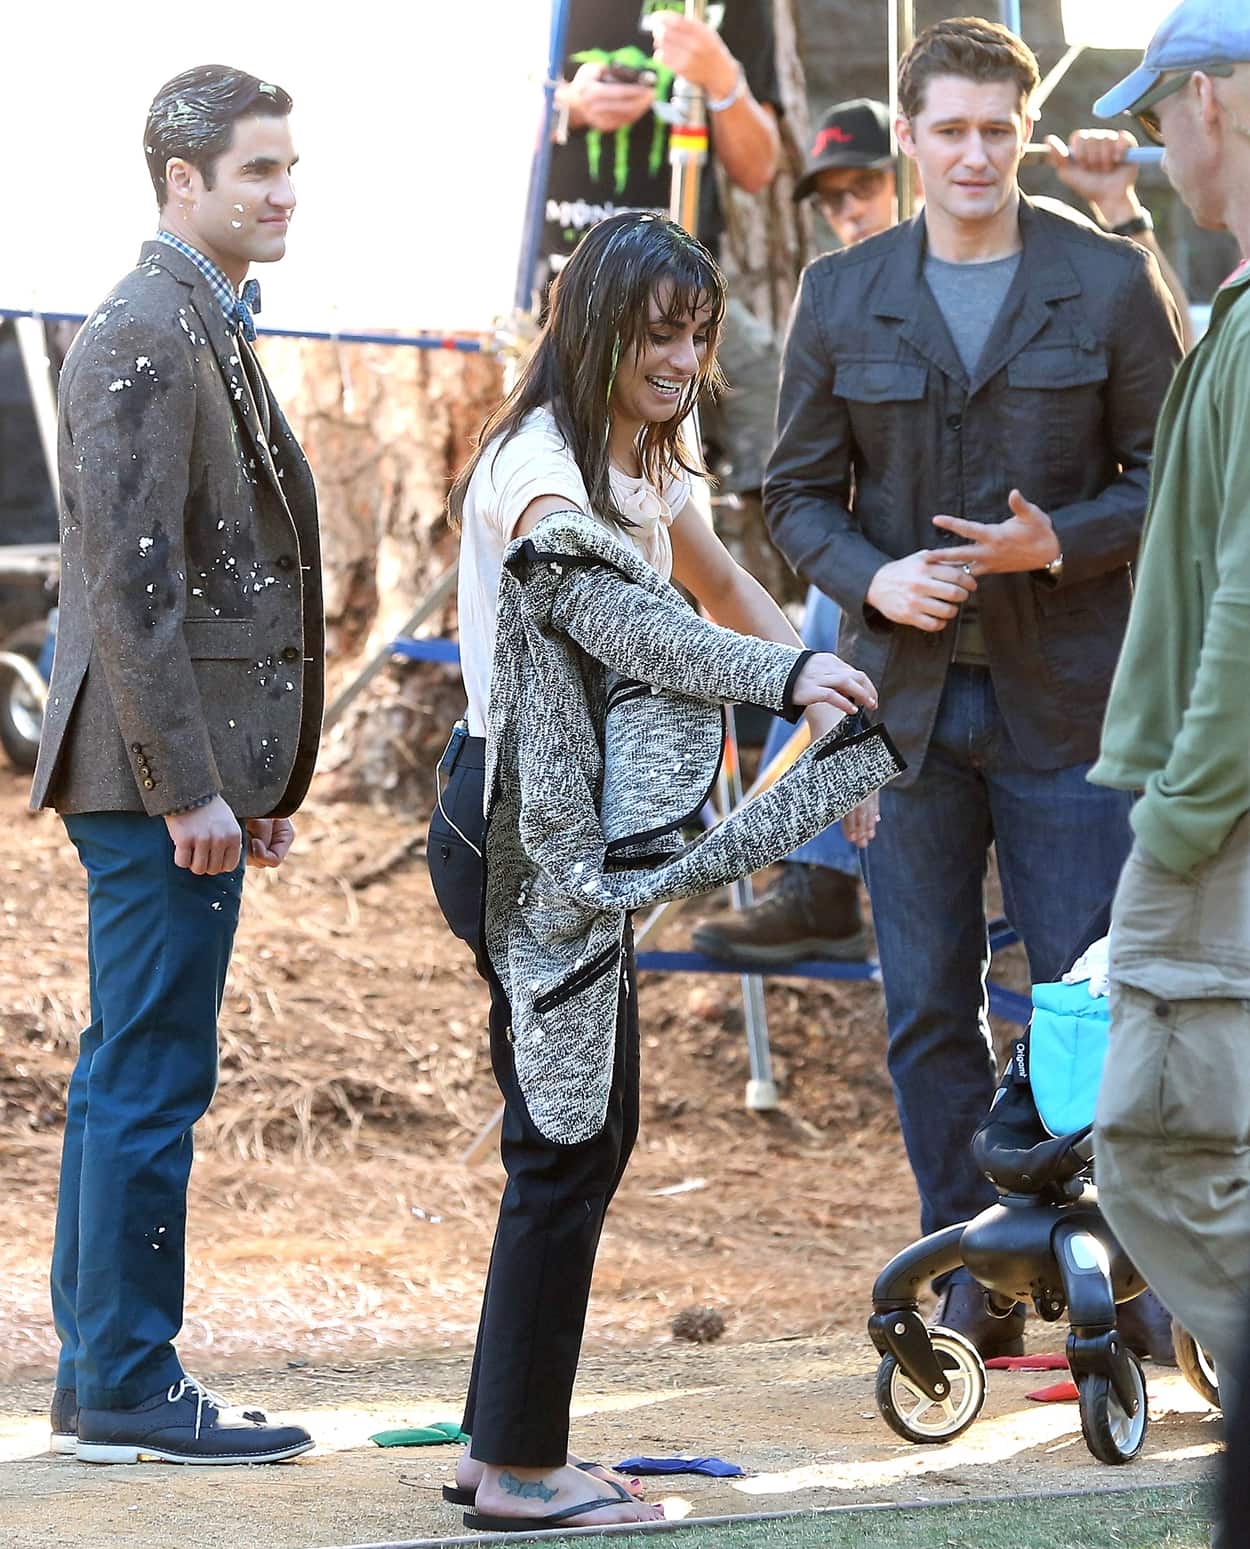 Matthew Morrison, Lea Michele, and Darren Criss on the set of Glee